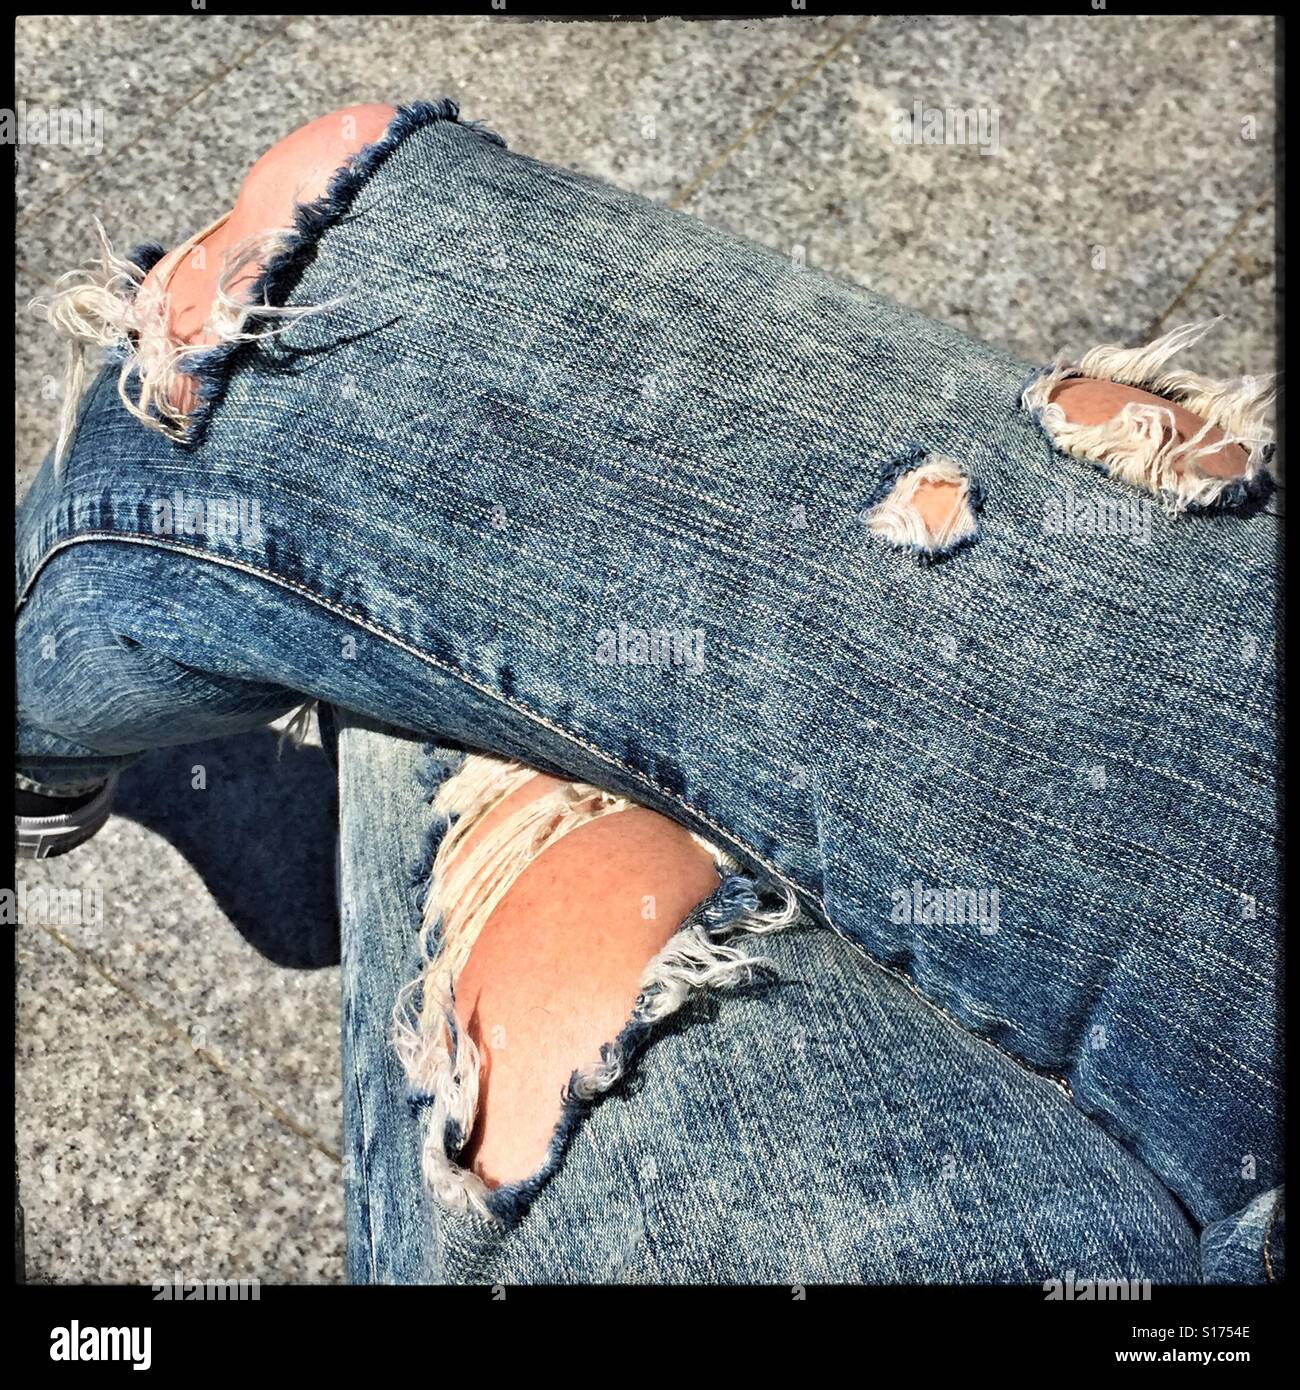 Gambe incrociate indossando strappato e jeans scoloriti, USA, 2016 © Katharine Andriotis Foto Stock